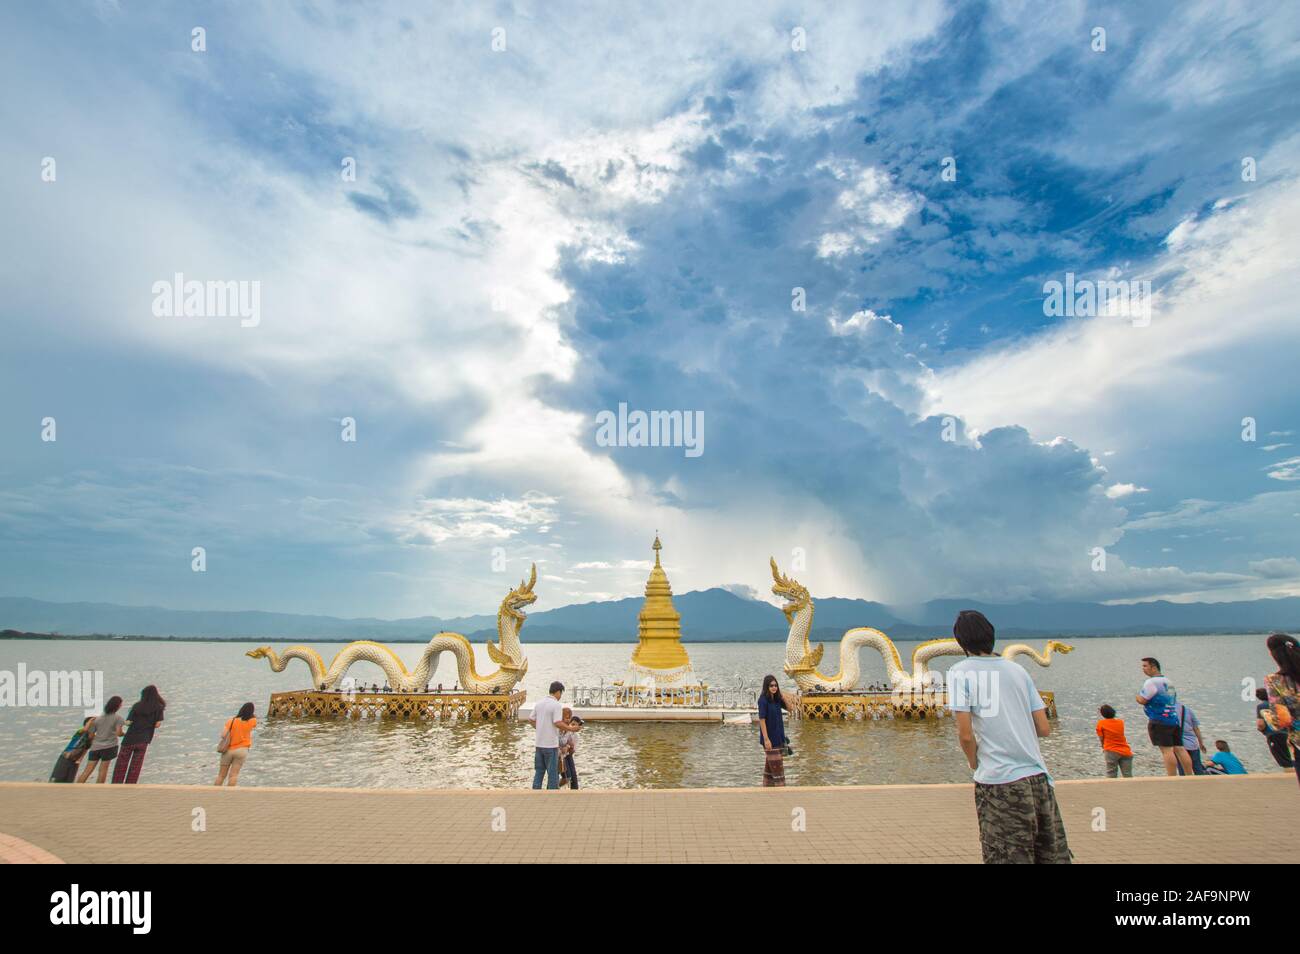 Phayao, Thailand - October 13, 2019: The Naga statue in Phayao lake (Kwan Phayao) with blue sky background. Stock Photo